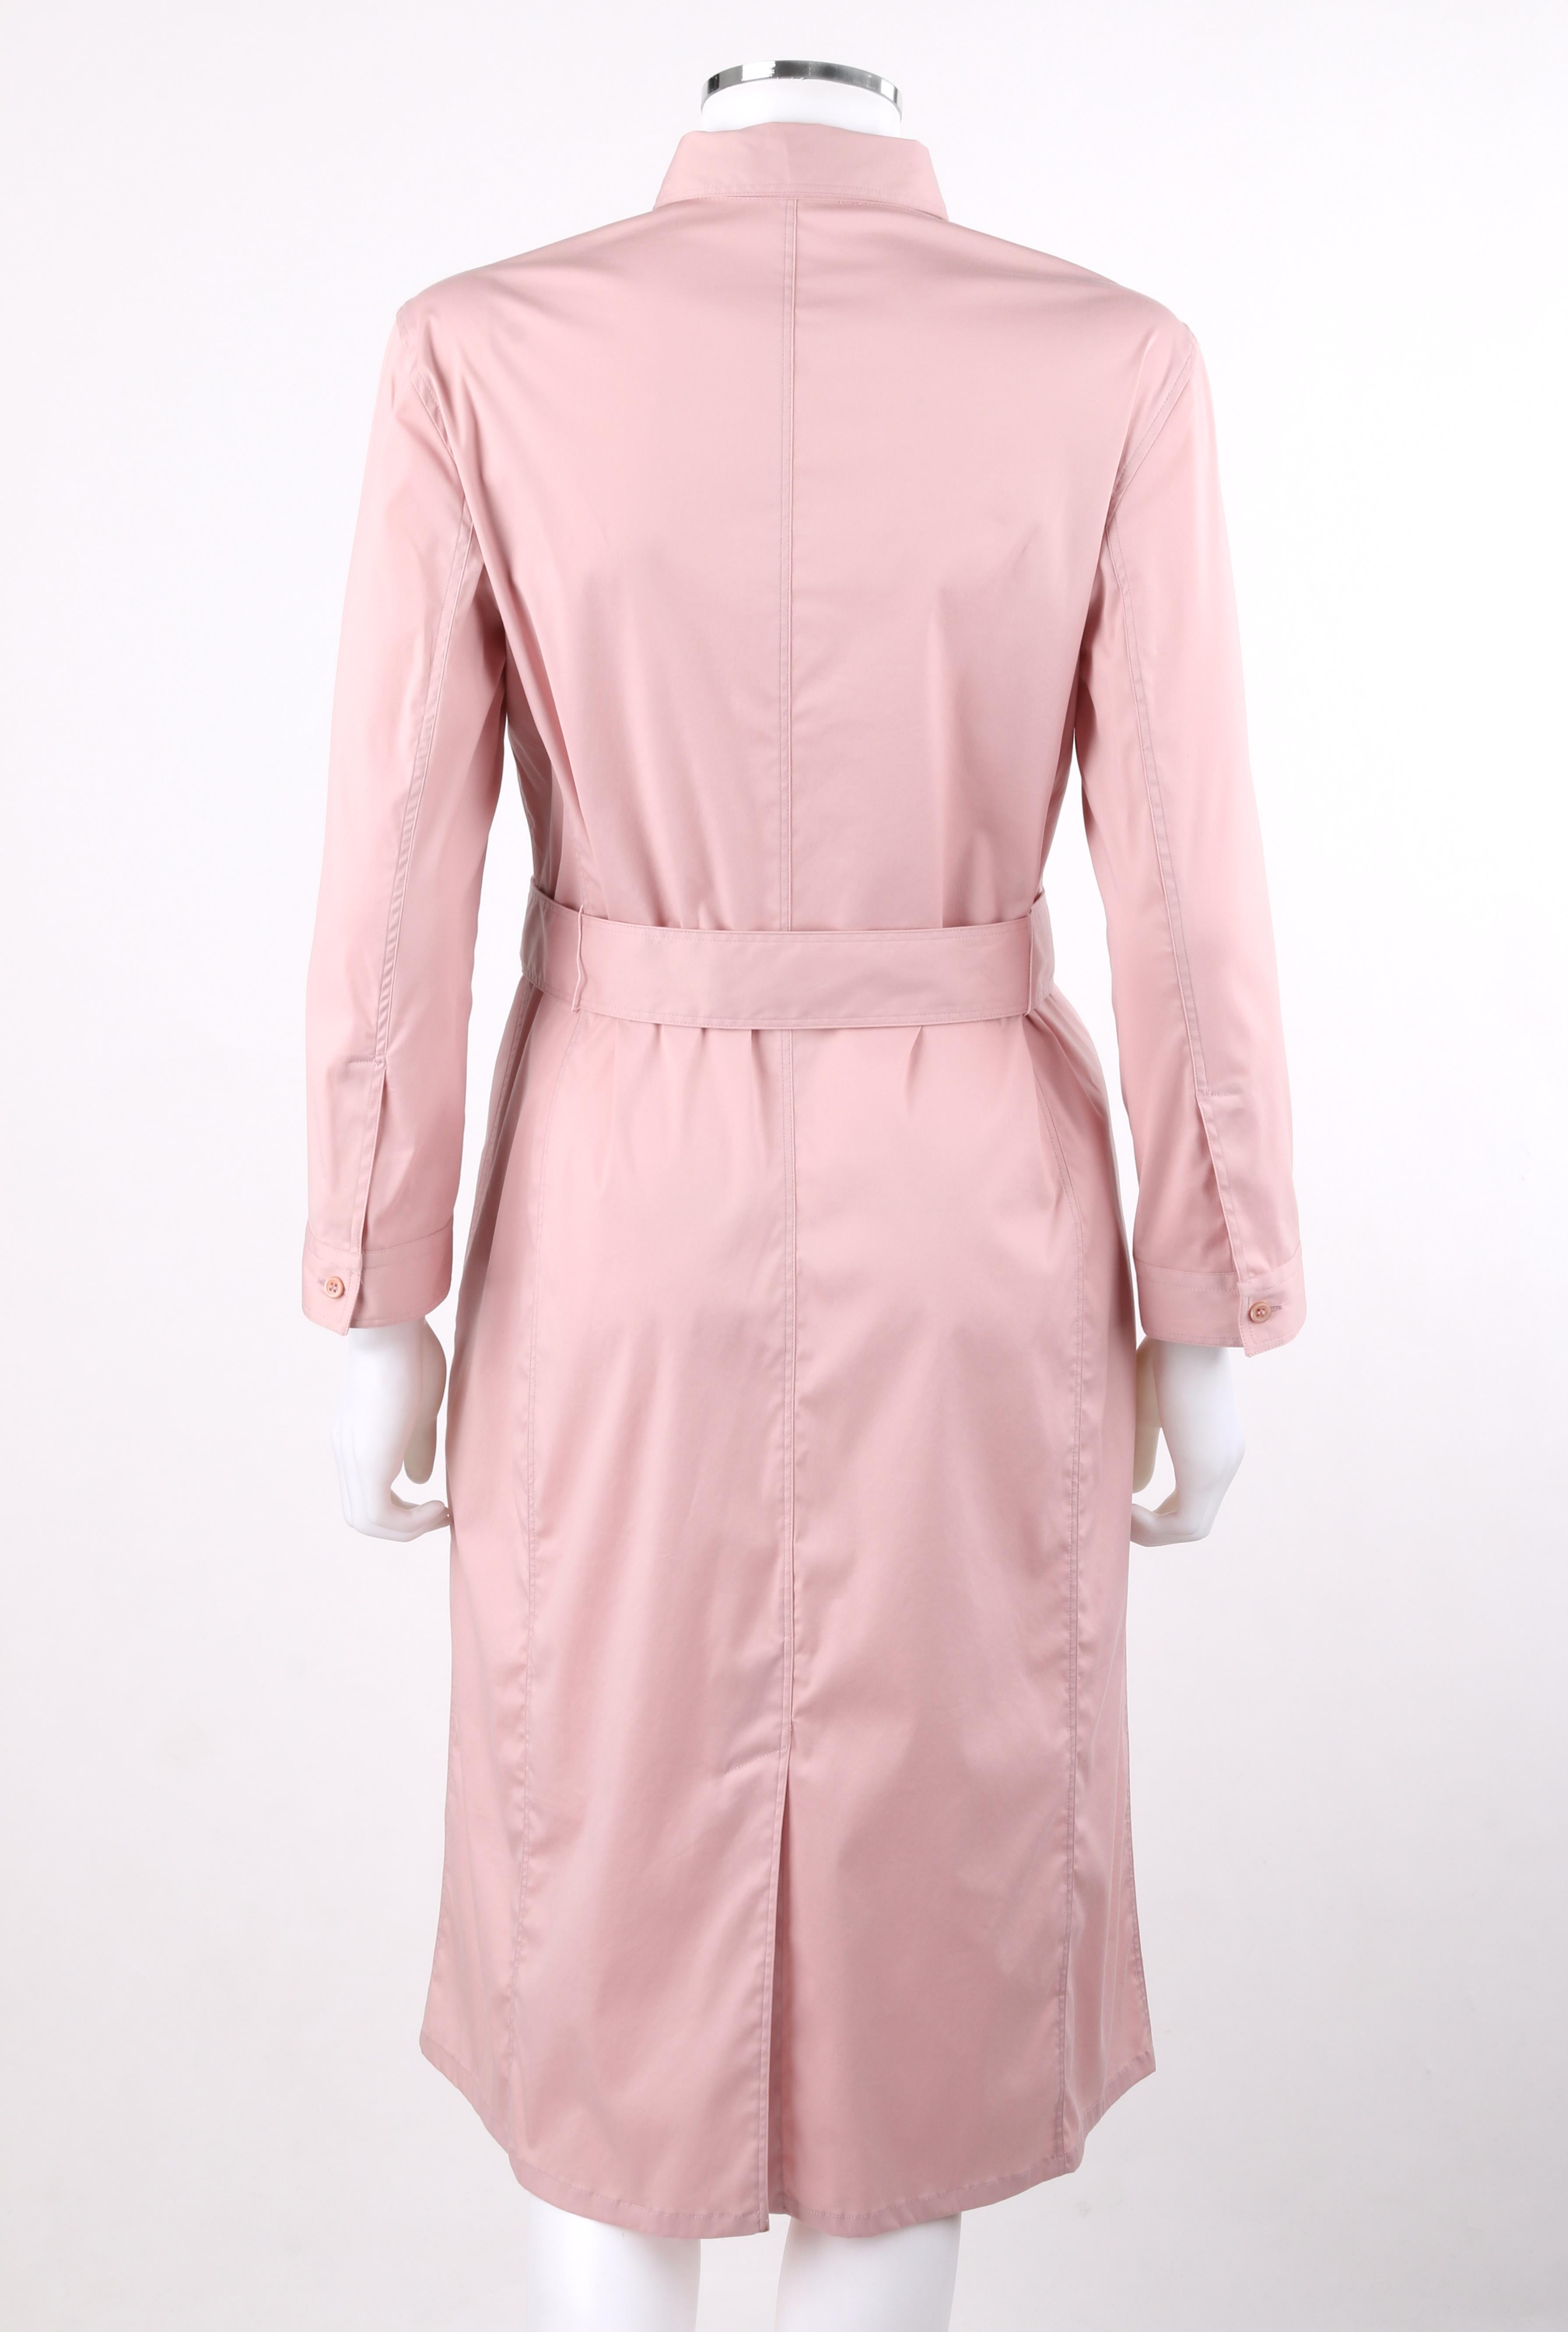 PRADA c.2000’s Pink Button Down Patch Pocket Belted Long Sleeve Shirt Dress 1